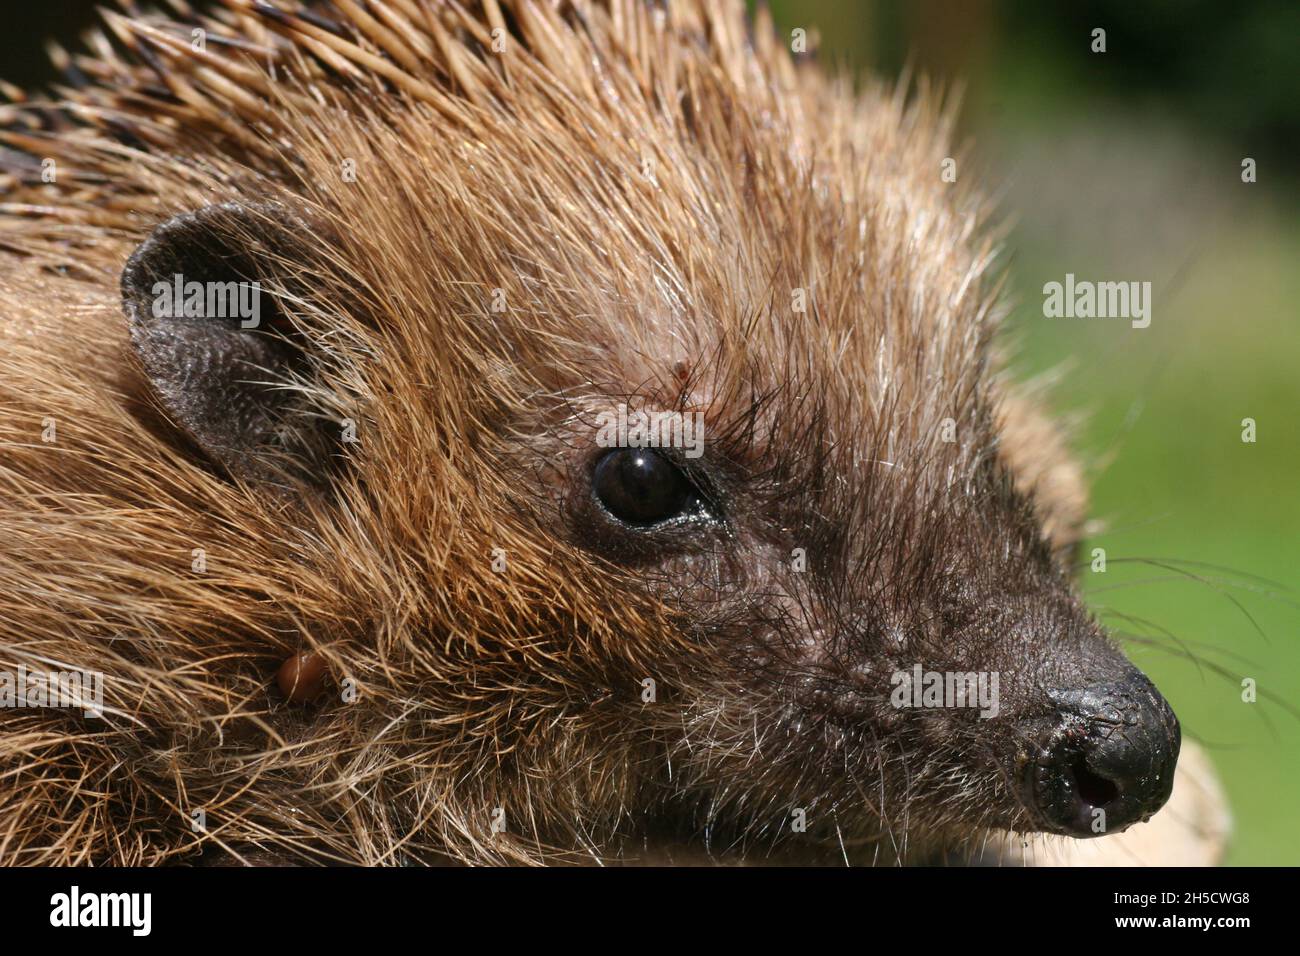 Western hedgehog, European hedgehog (Erinaceus europaeus), portrait, Germany Stock Photo